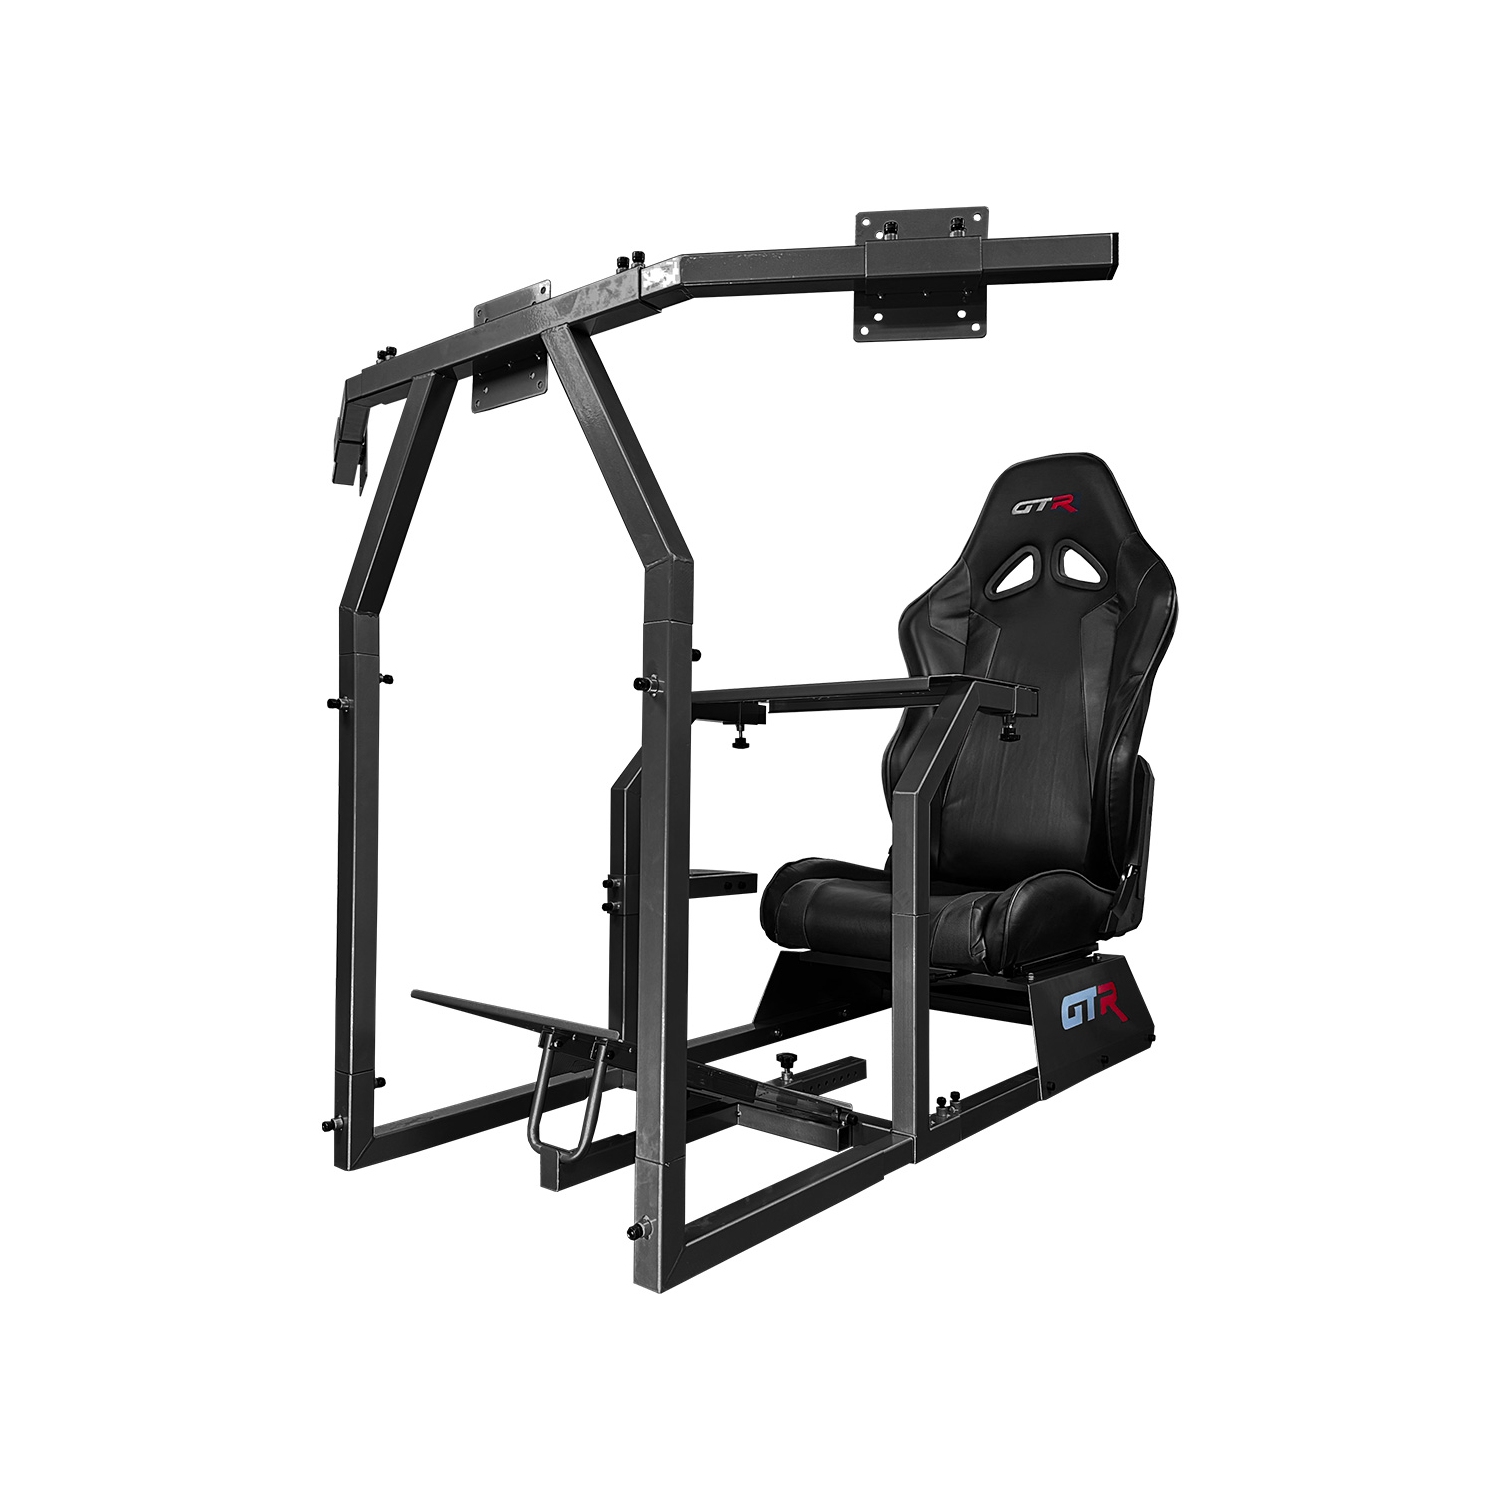 GTR Simulator GTA-F Model (Black) Triple or Single Monitor Stand with Black Adjustable Leatherette Seat